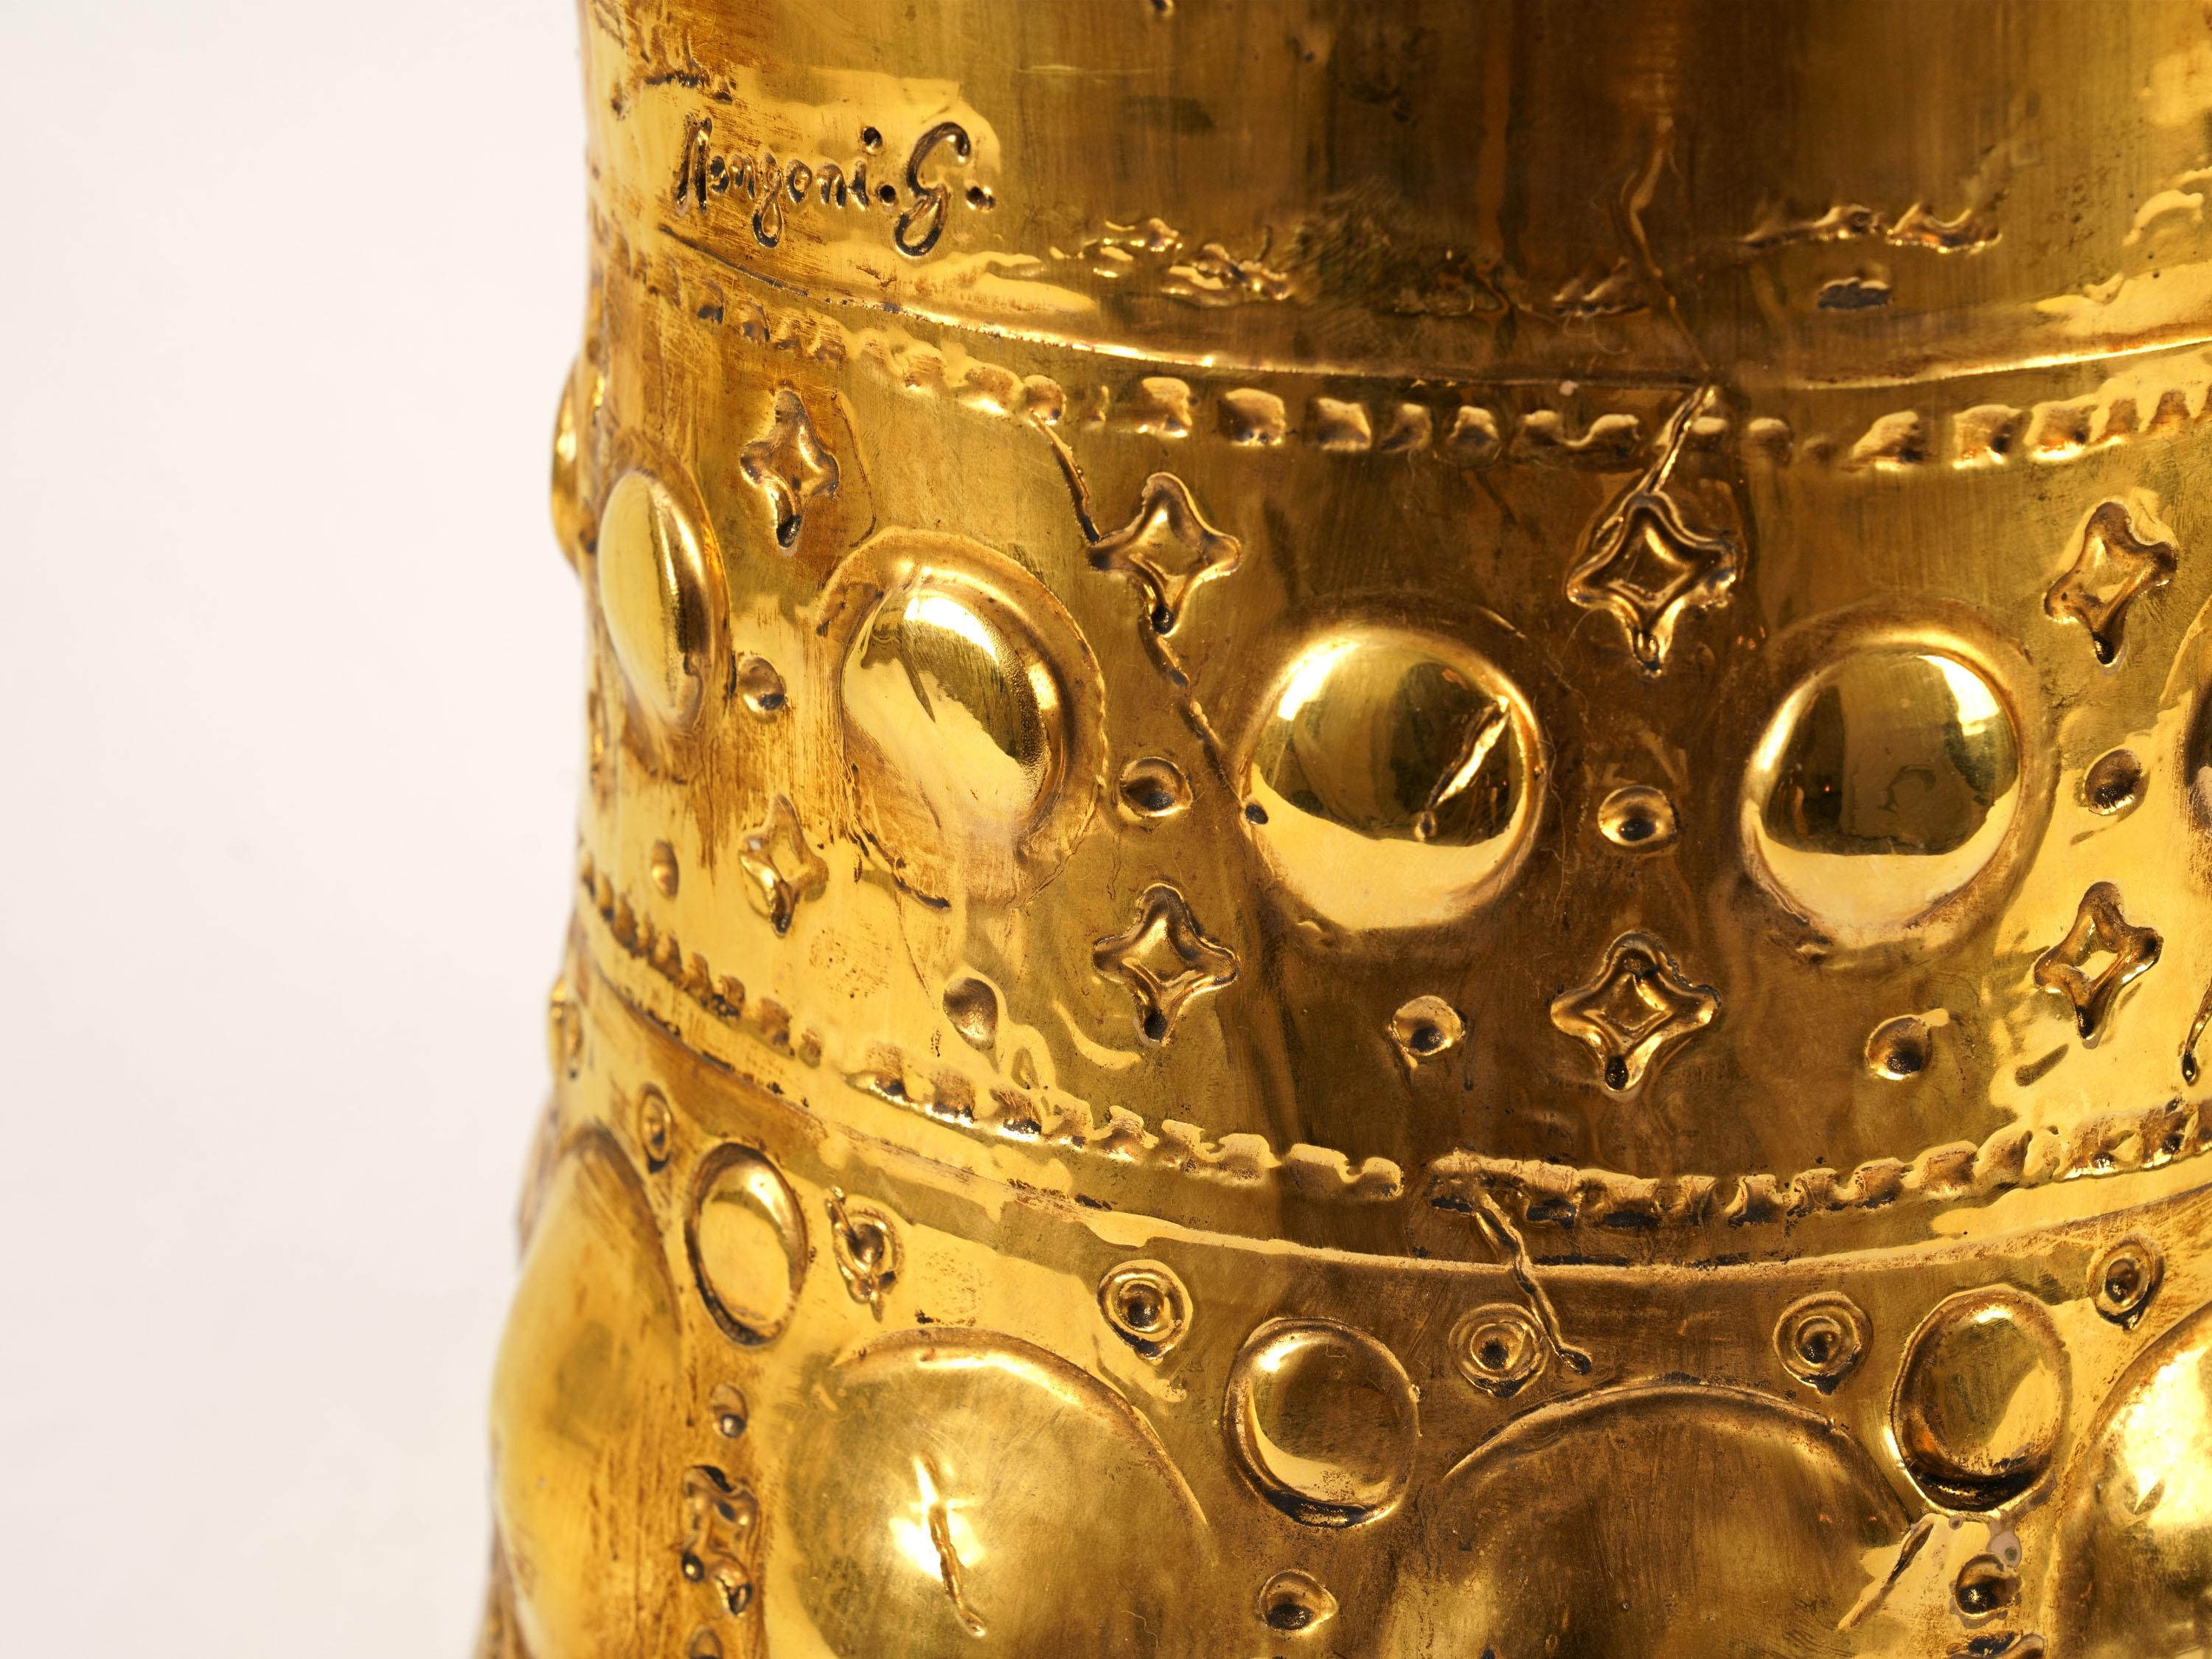 Sculpture Ceramic Vase 24 Karat Gold Luster Vessel Decoration Handmade, Italy In New Condition For Sale In Recanati, IT